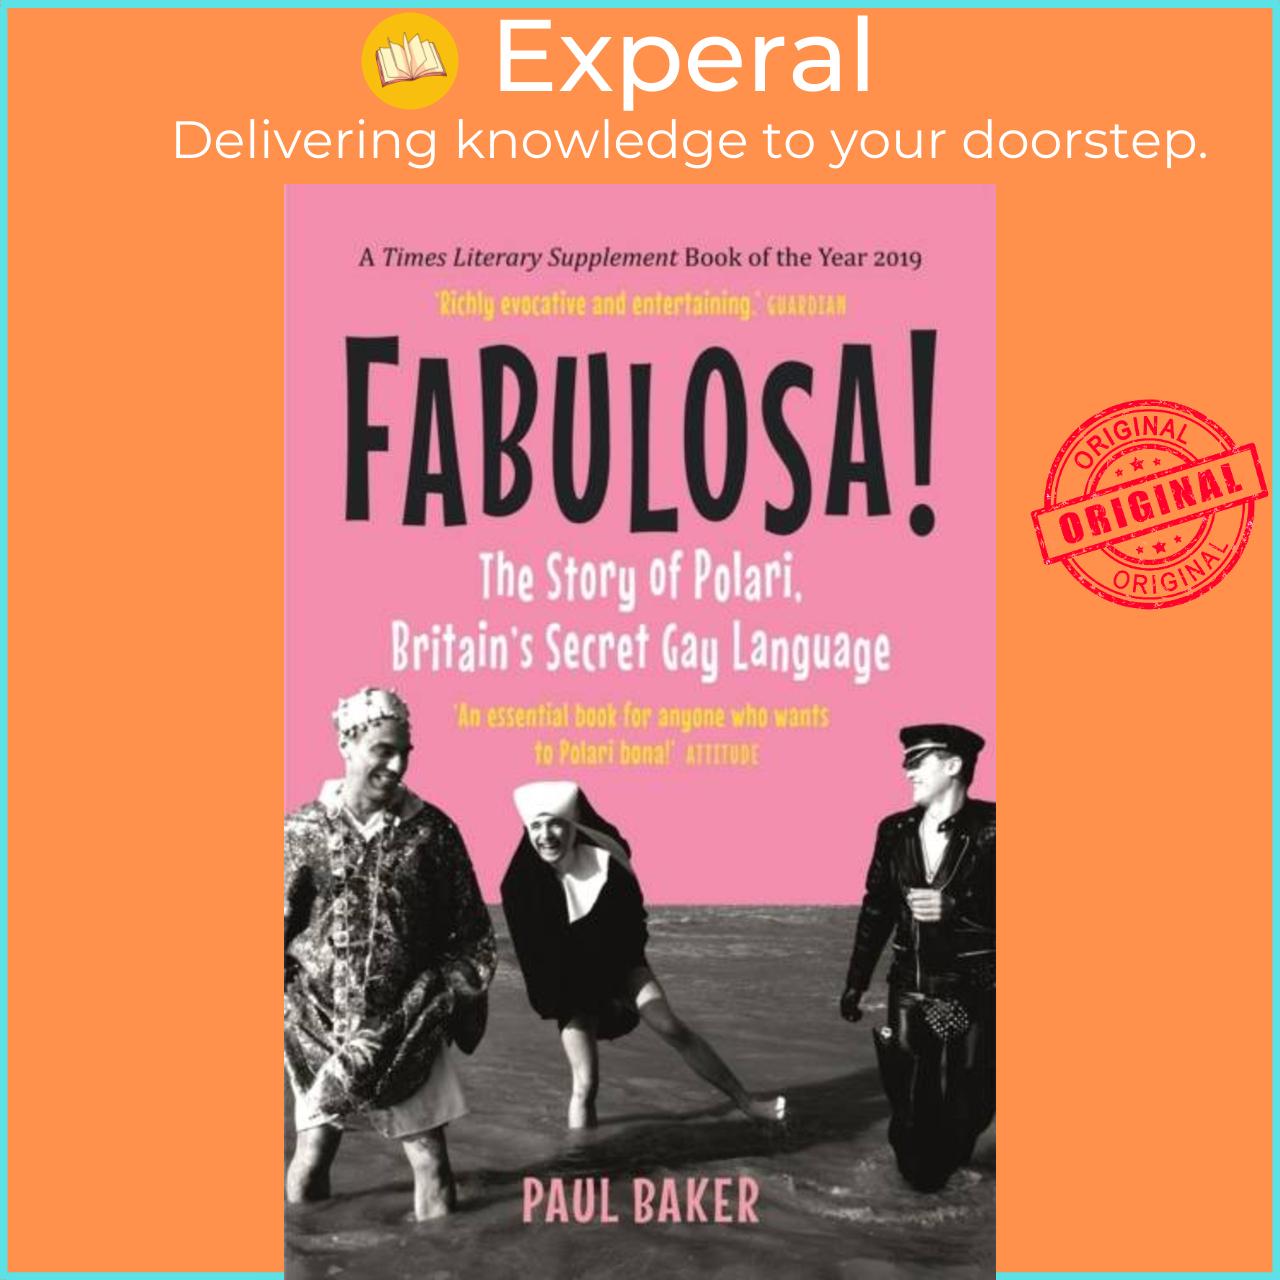 Sách - Fabulosa! - The Story of Polari, Britain's Secret Gay Language by Paul Baker (UK edition, paperback)